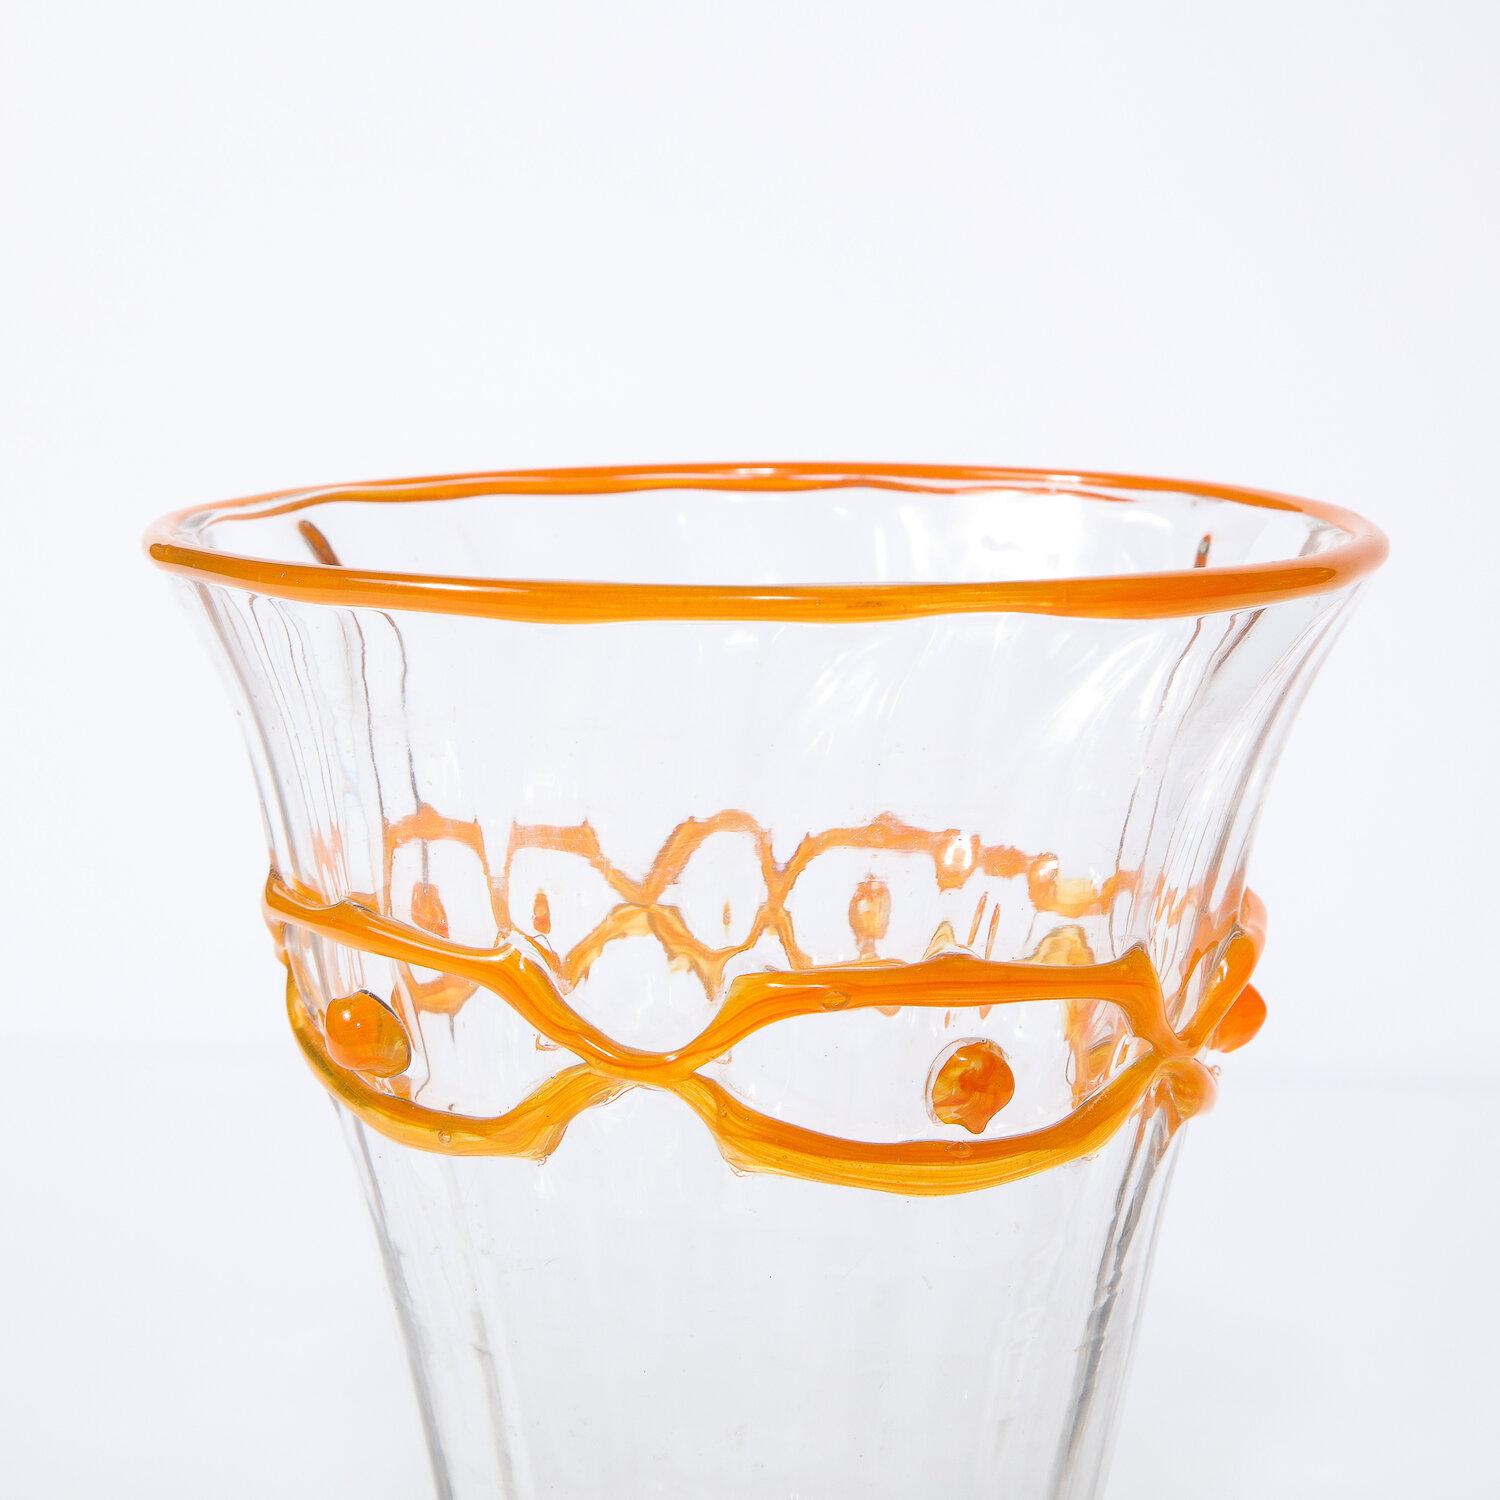 Art Deco Translucent Glass Vase w/ Tangerine Accents in Relief Signed Daum Nancy 1